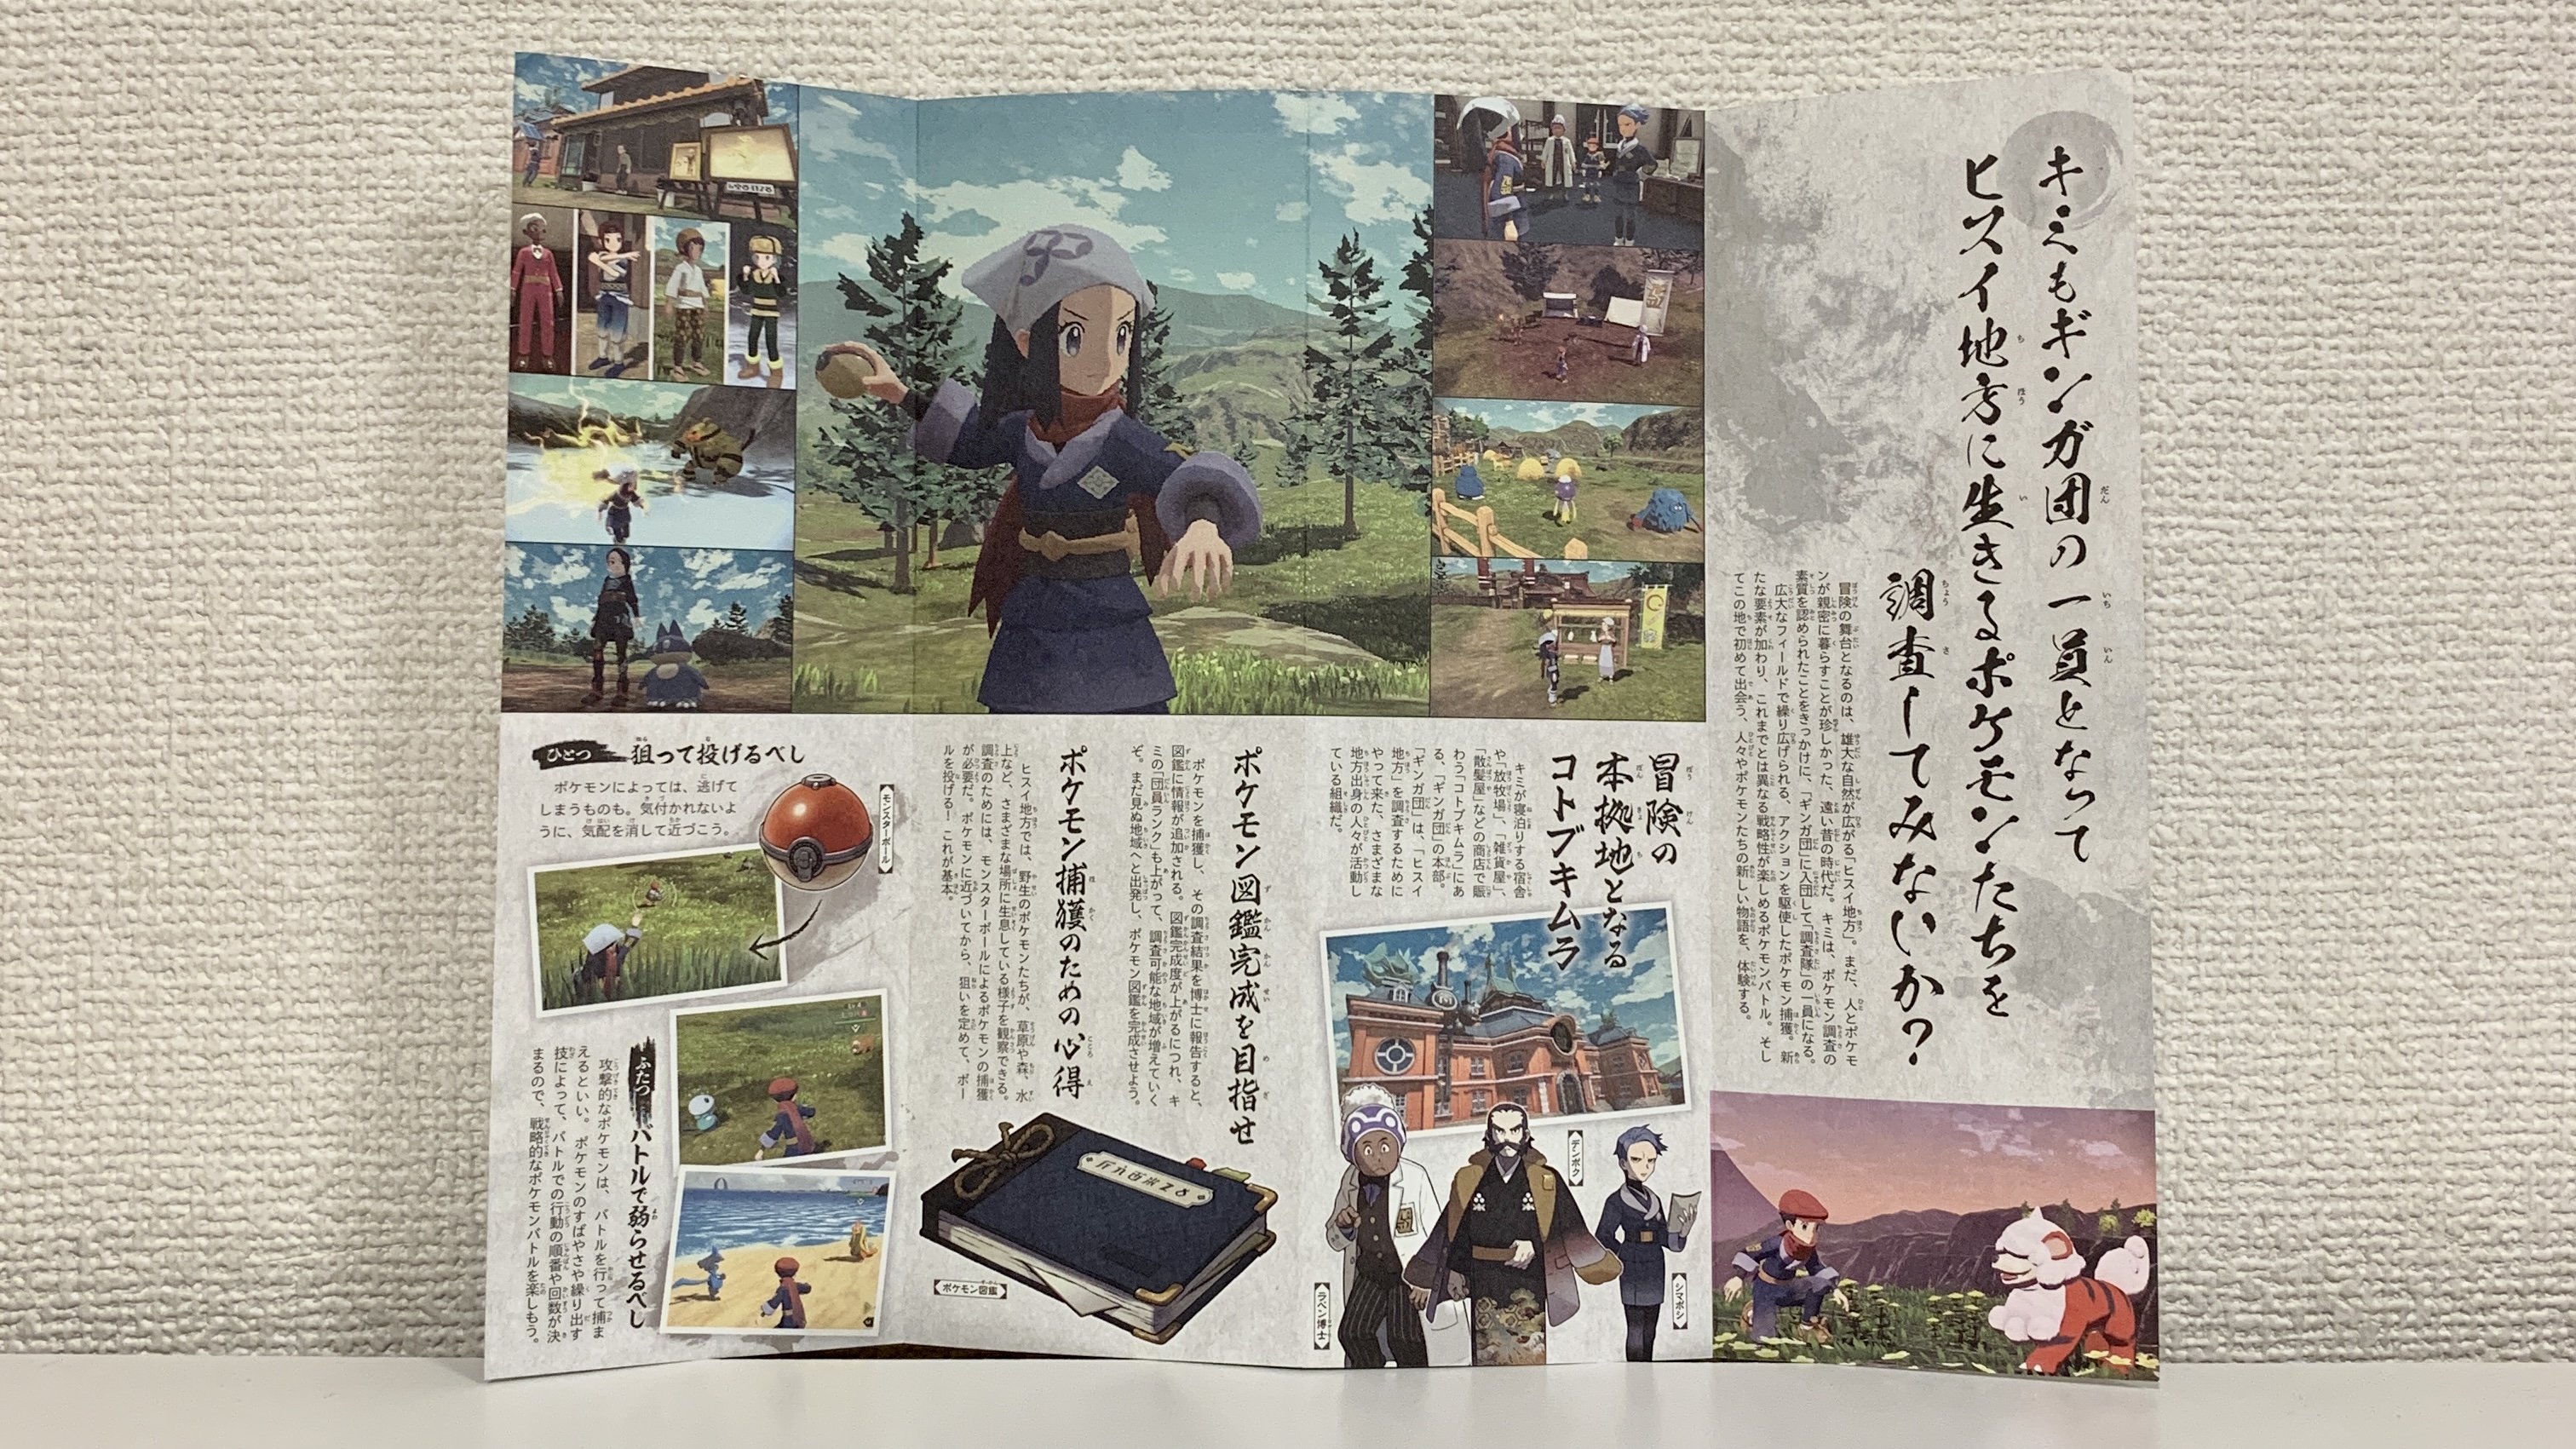 Centro Pokemon Brochure Y Stand De Pokemon Legends En Pokemon Center En Japon T Co Qbgd187s8o Twitter